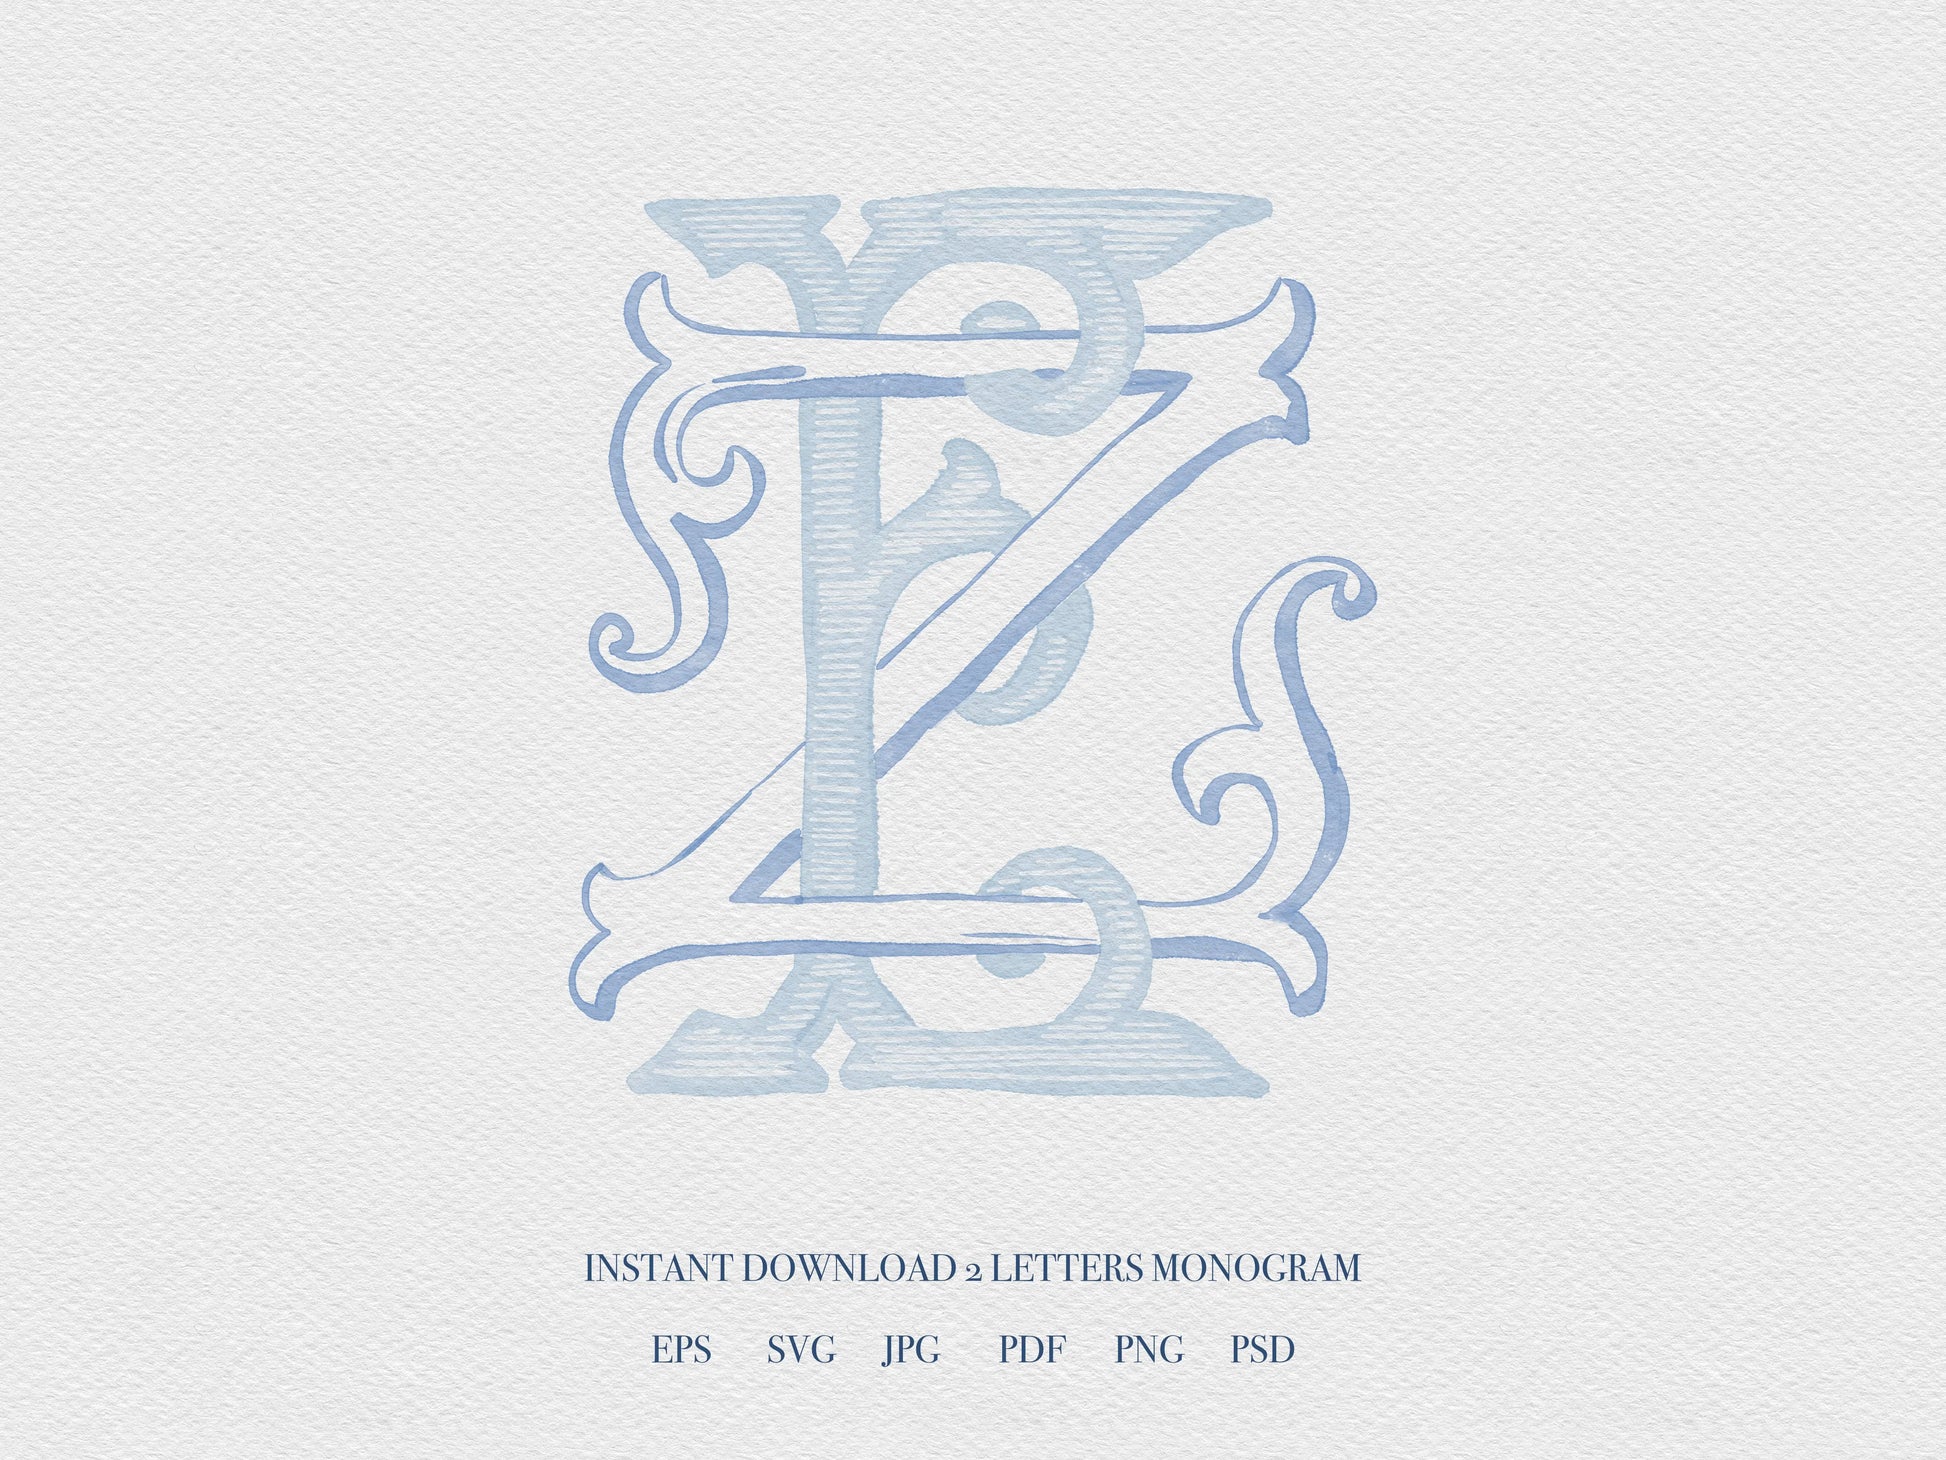 2 Letter Monogram with Letters EZ | Digital Download - Wedding Monogram SVG, Personal Logo, Wedding Logo for Wedding Invitations The Wedding Crest Lab